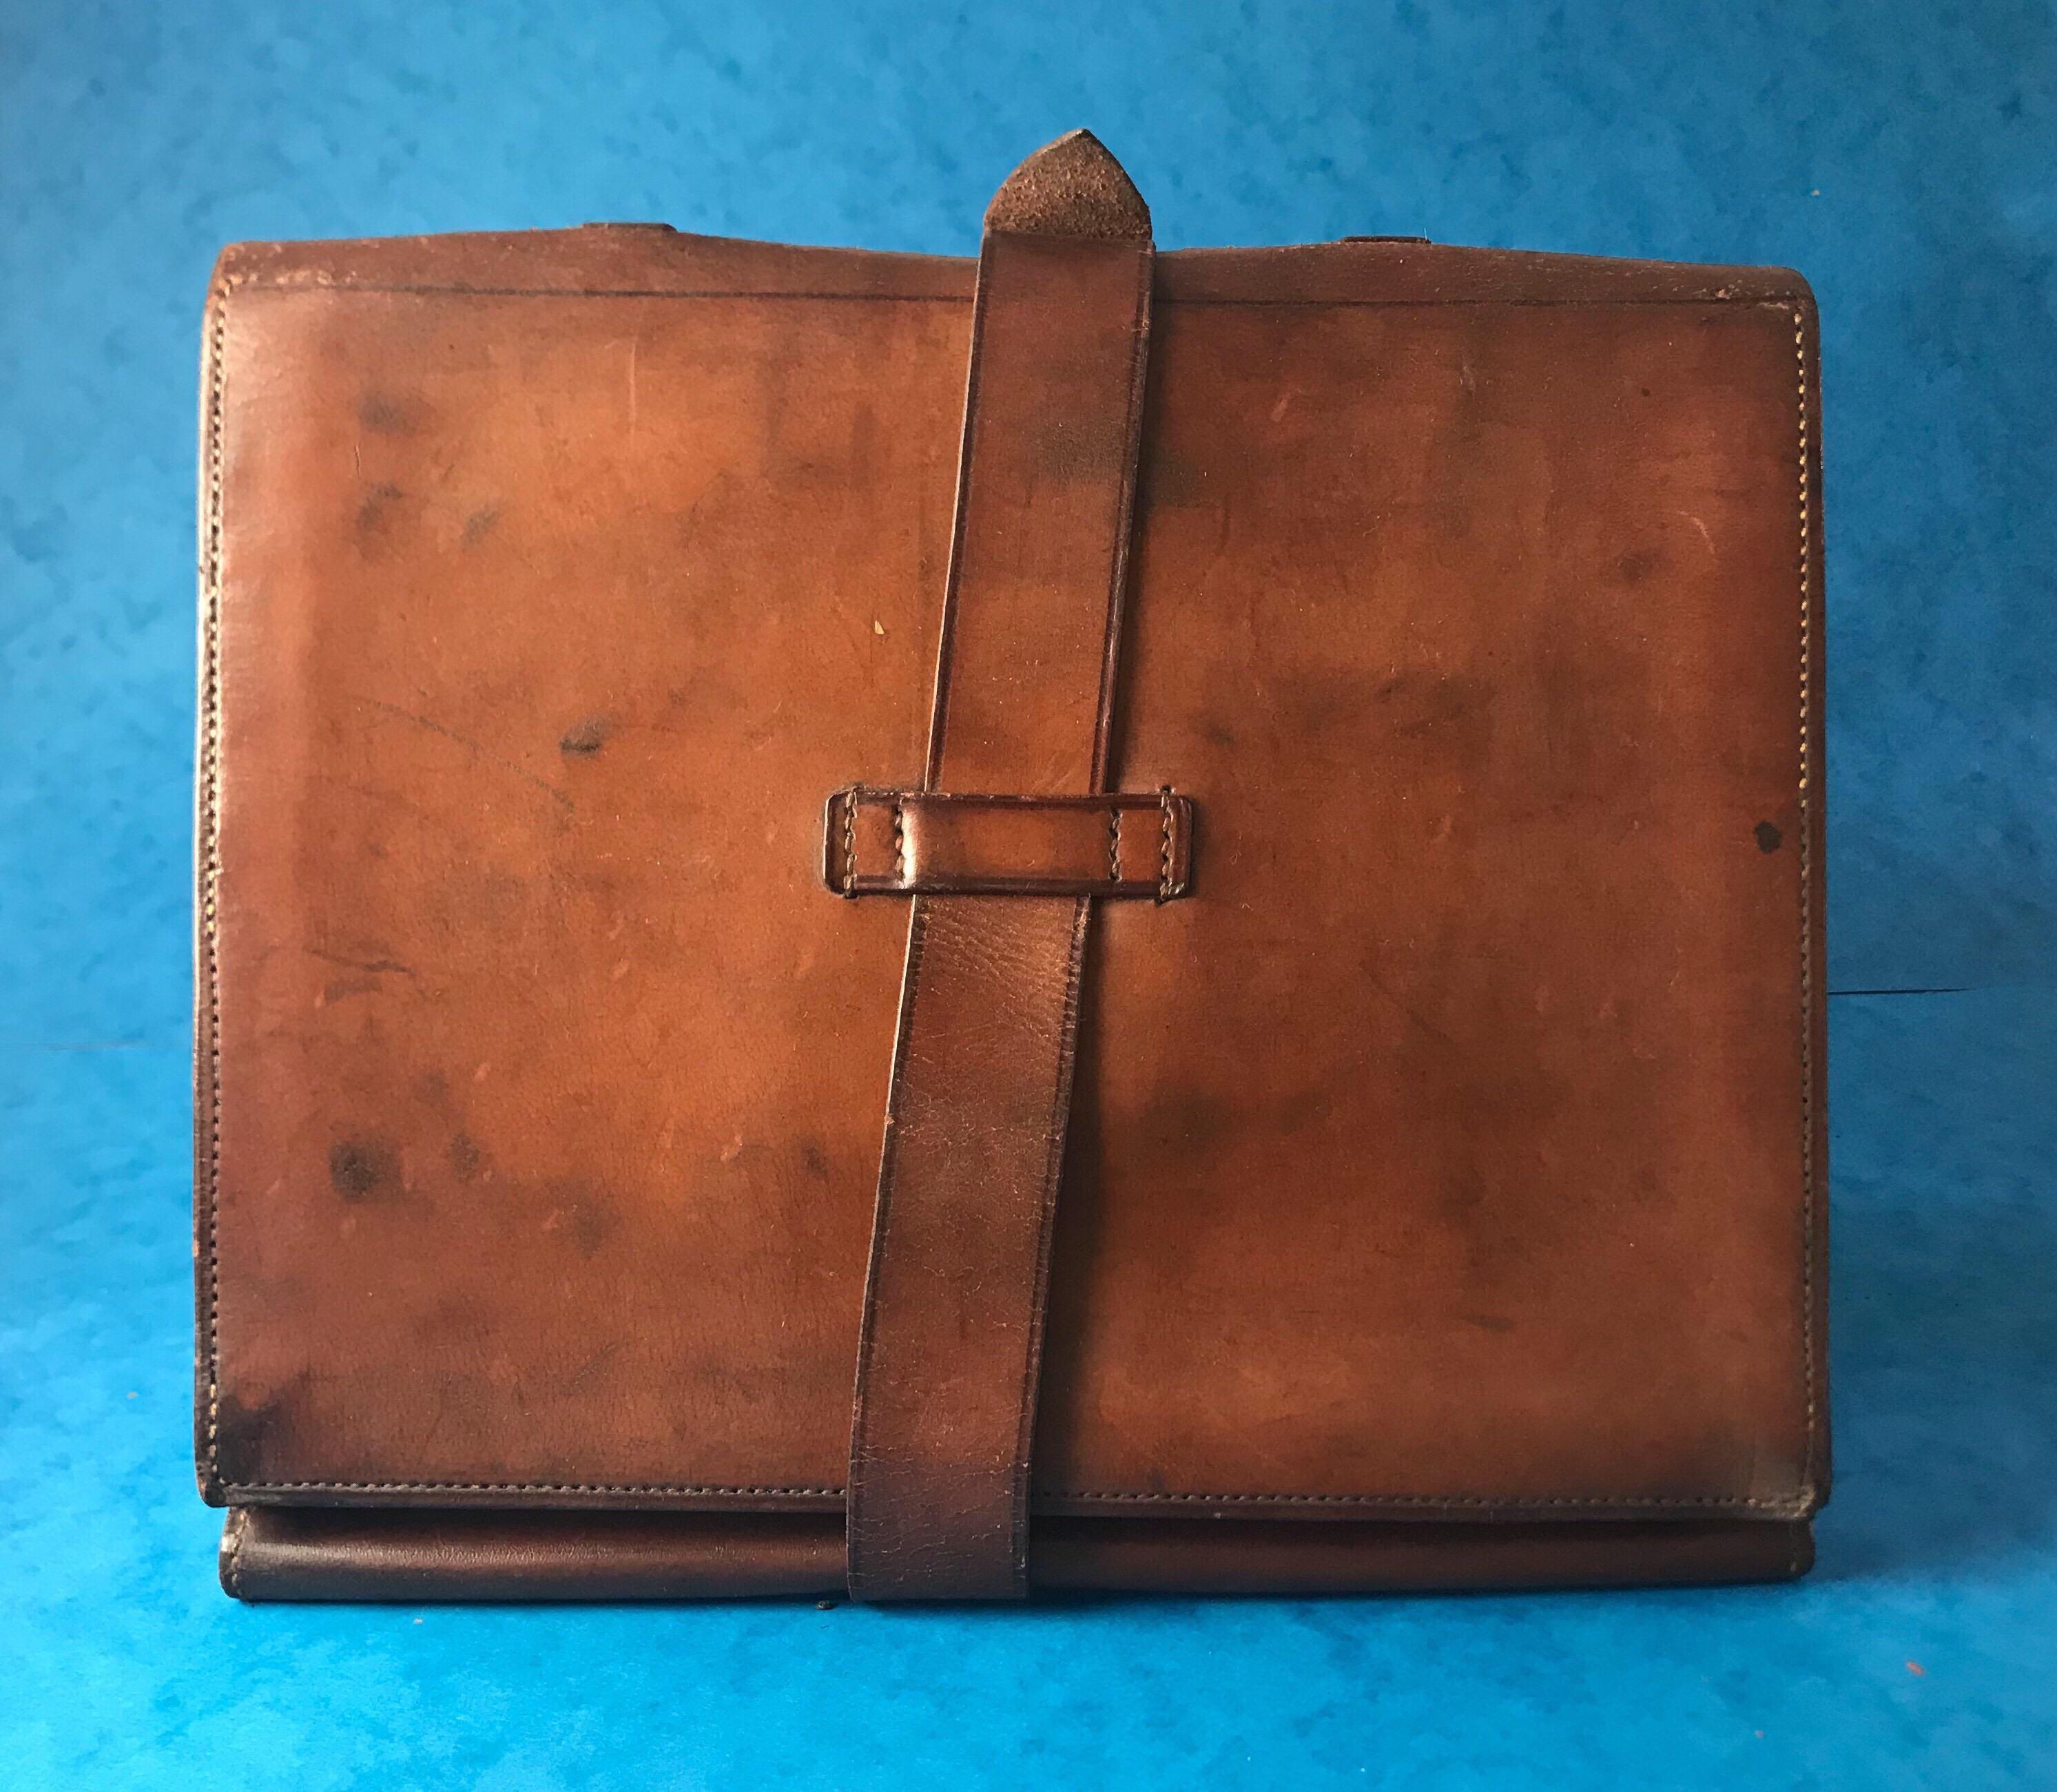 Attaché Leather case 8